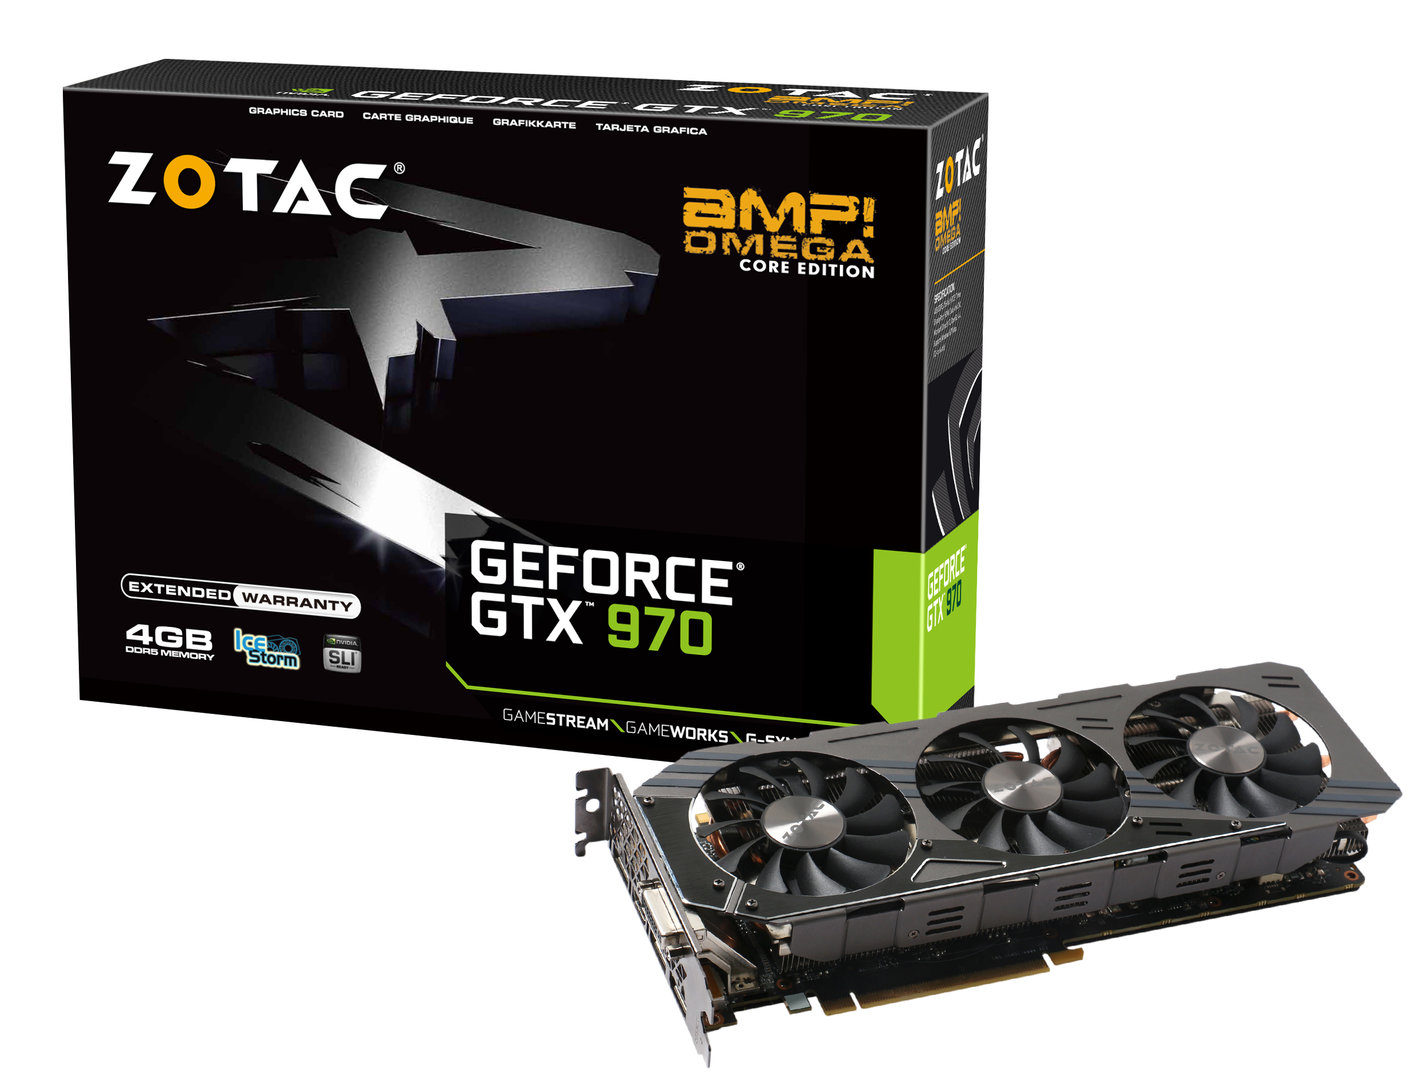 Zotac GeForce GTX 970 AMP! Omega Core Edition